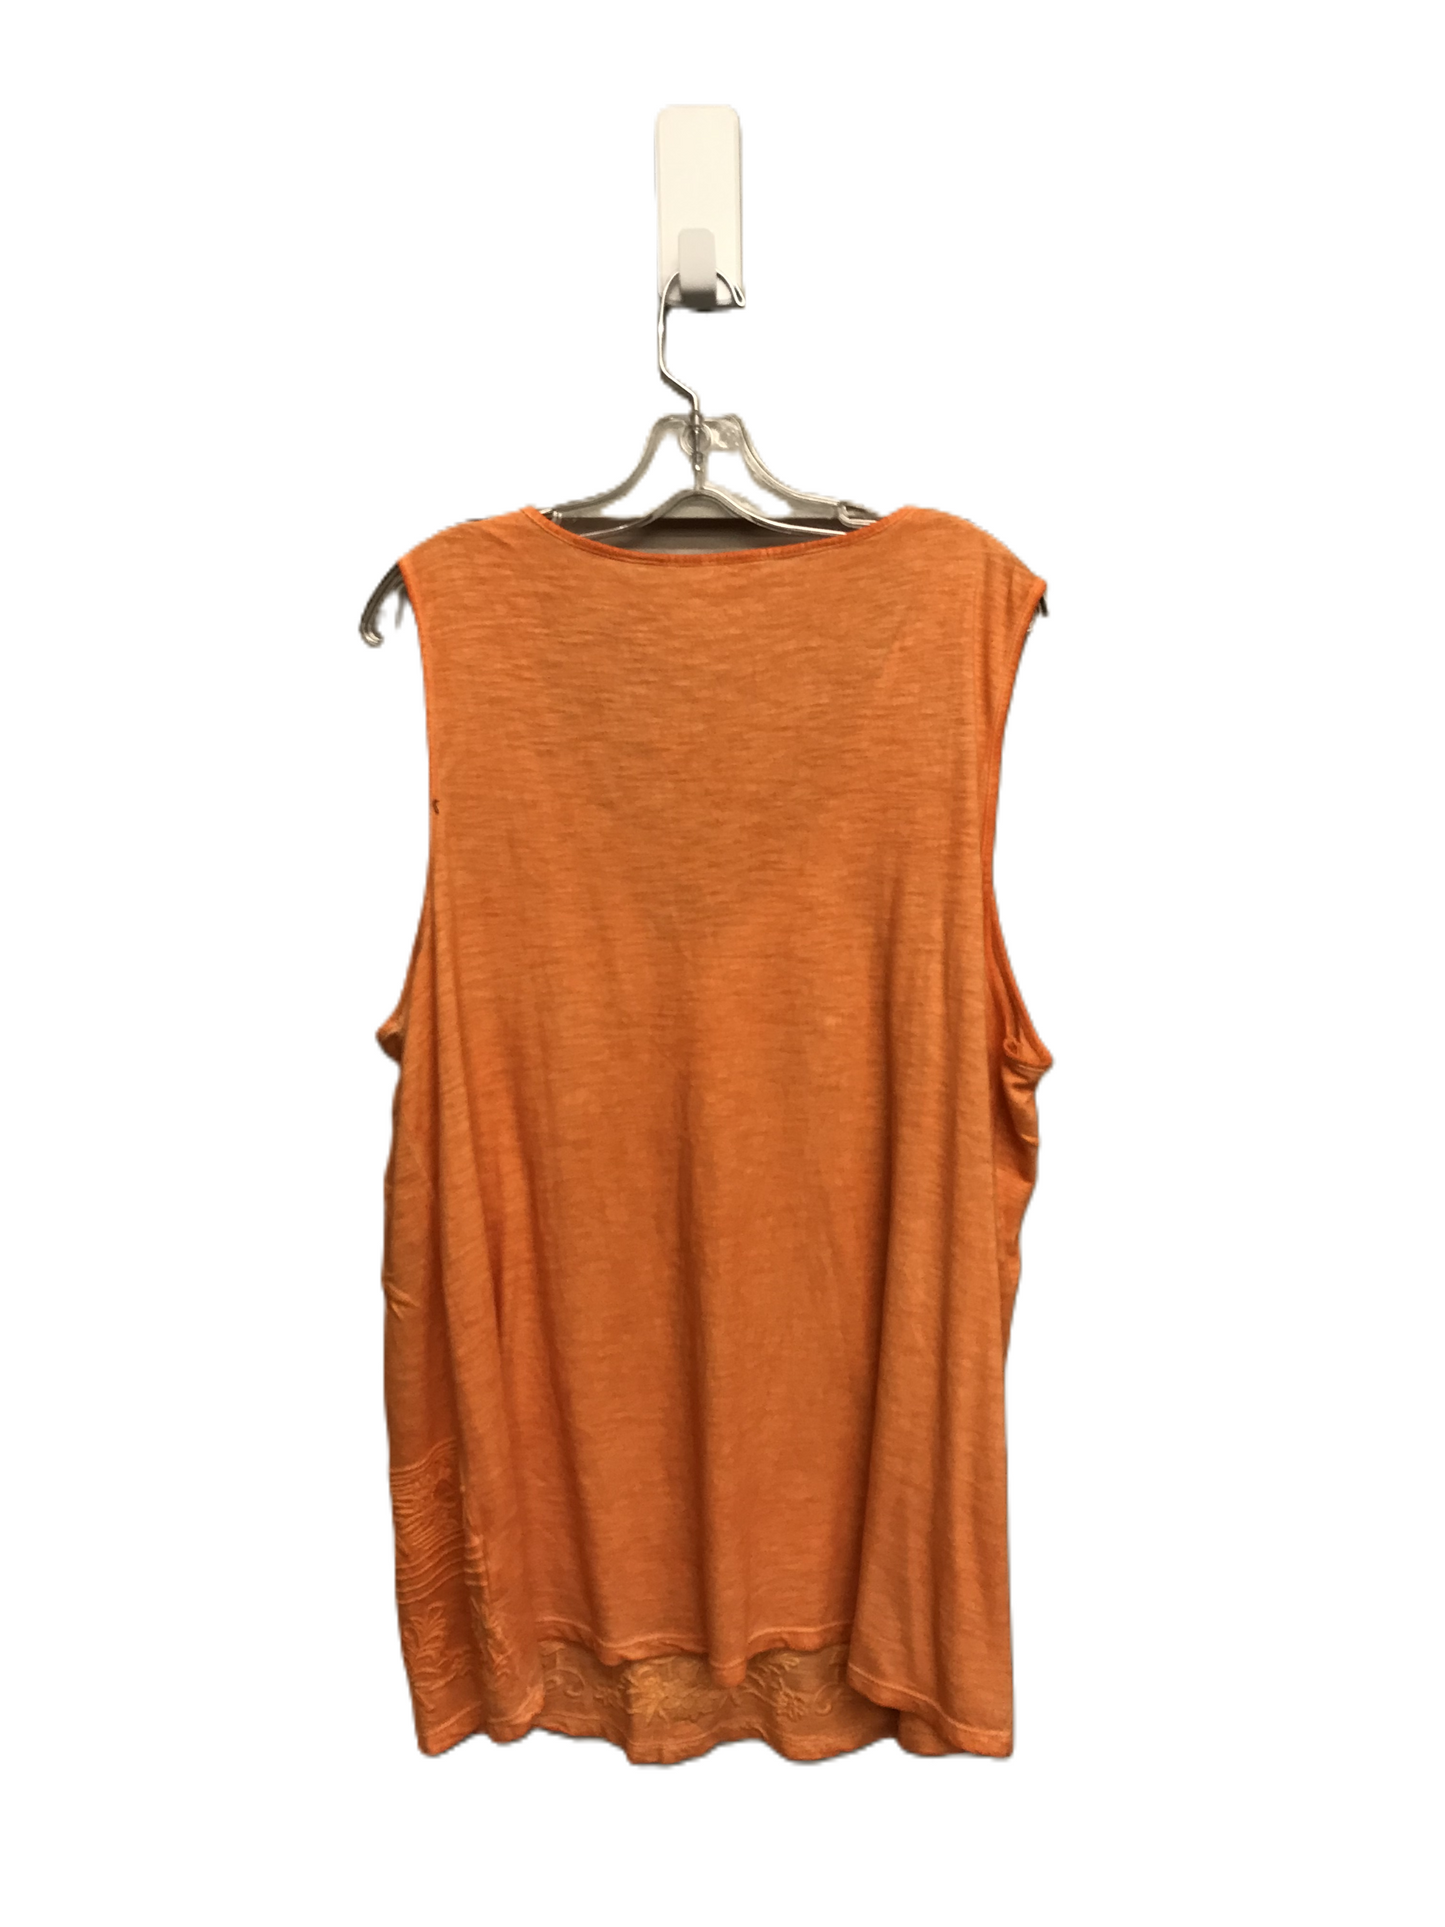 Orange Top Sleeveless By Soft Surroundings, Size: 1x